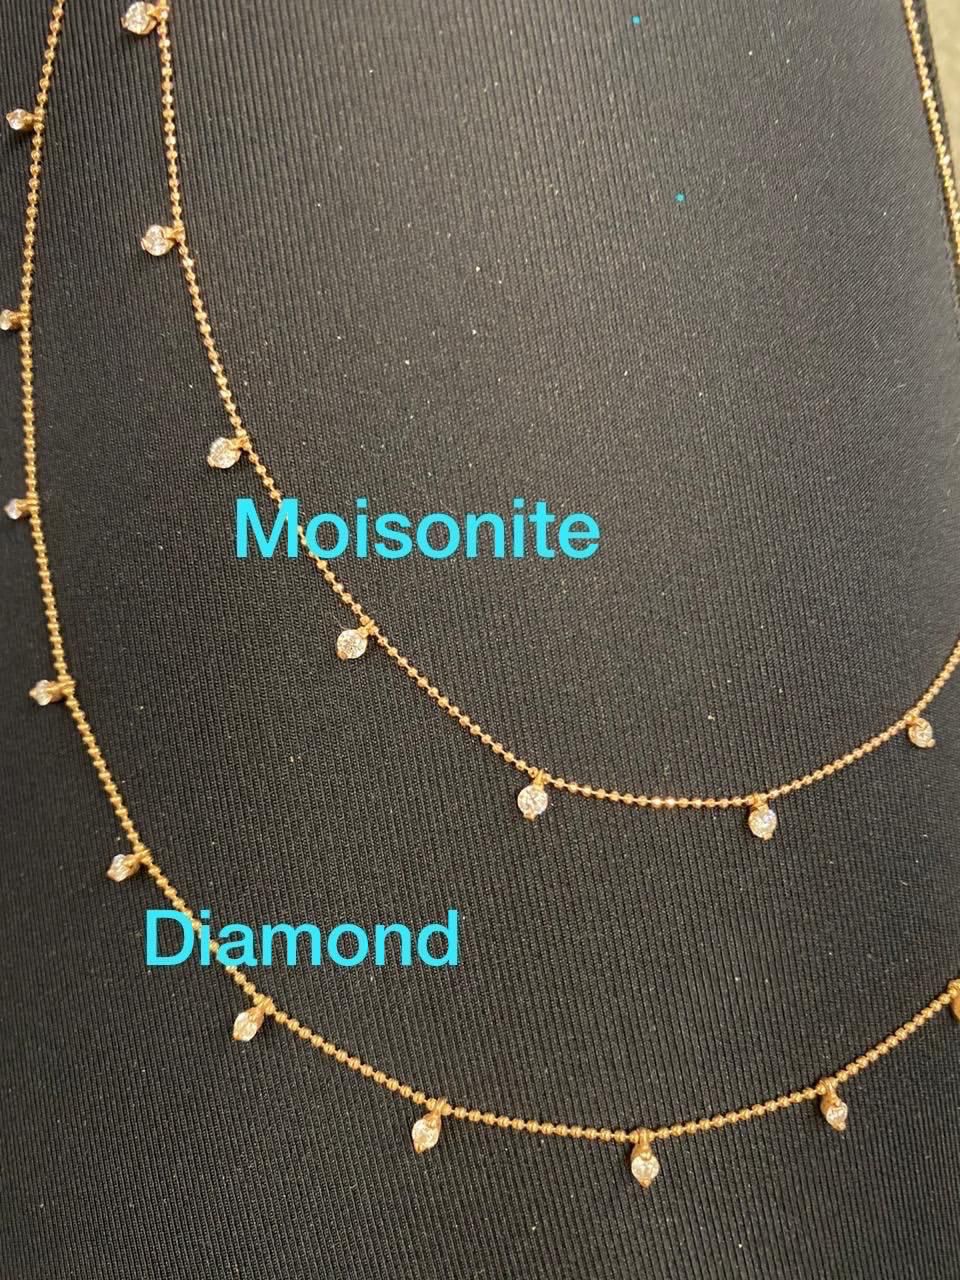 Moissonite diamond charm